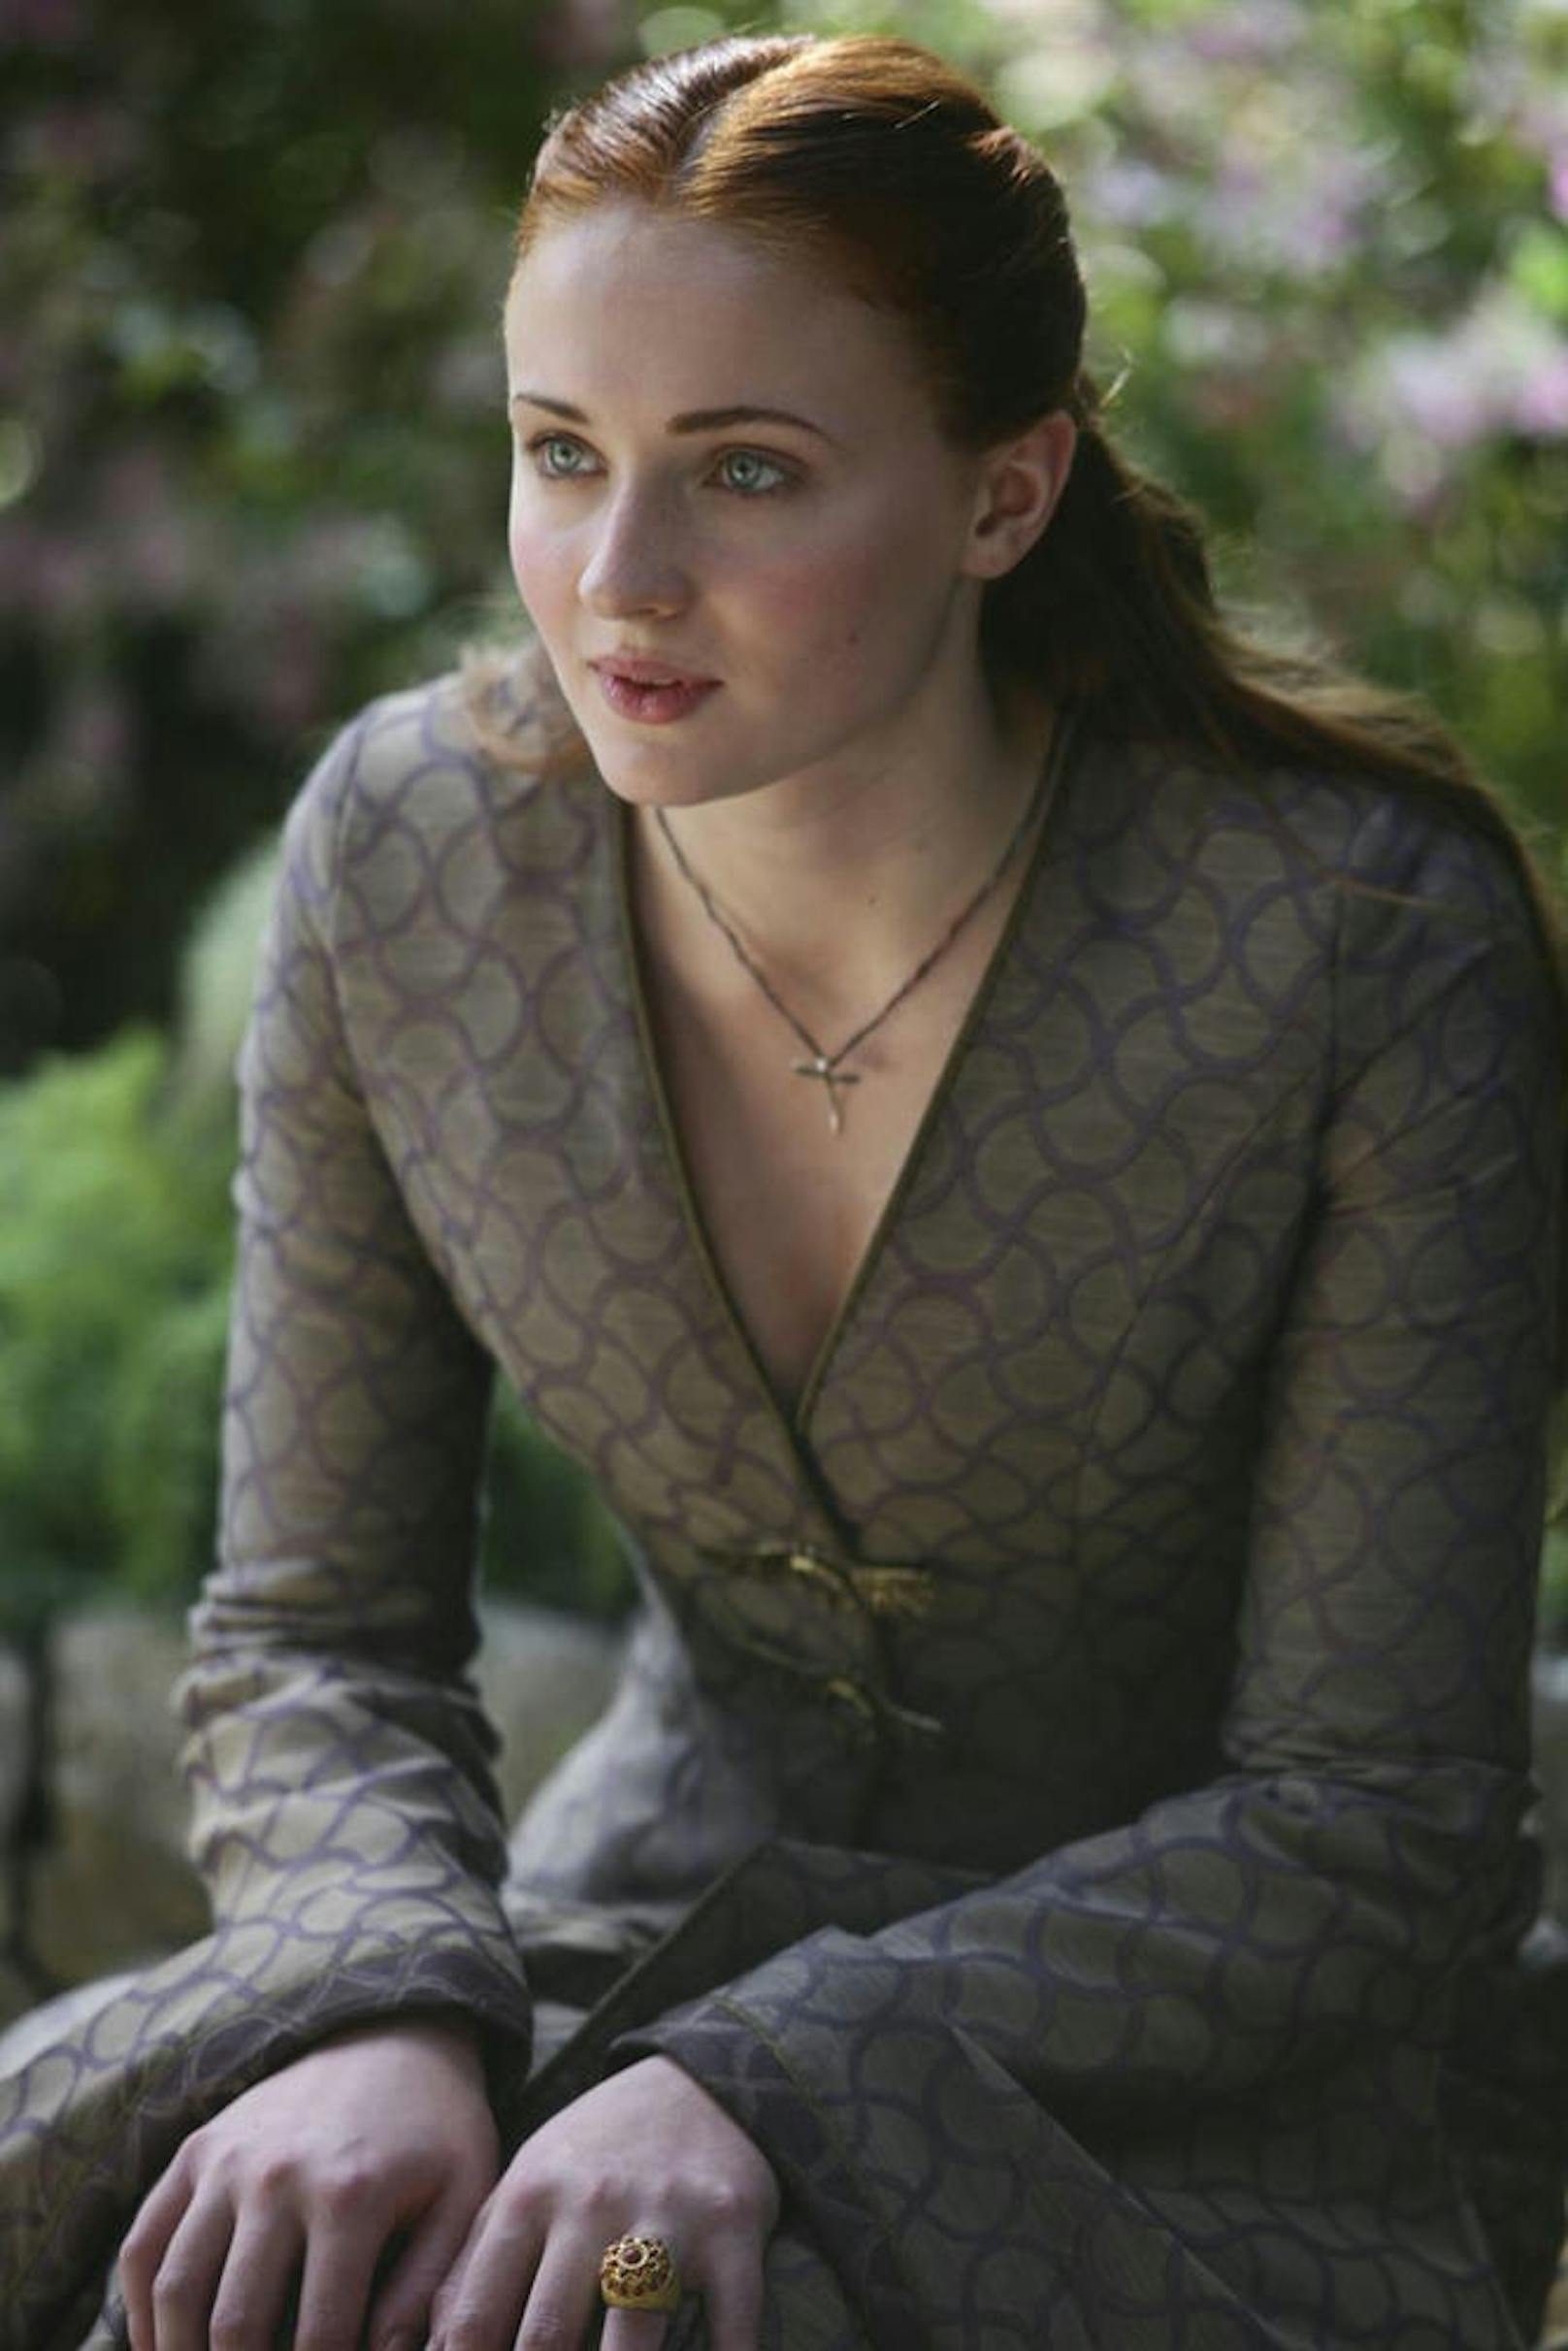 Sophie Turner als Sansa Stark in "Game of Thrones"